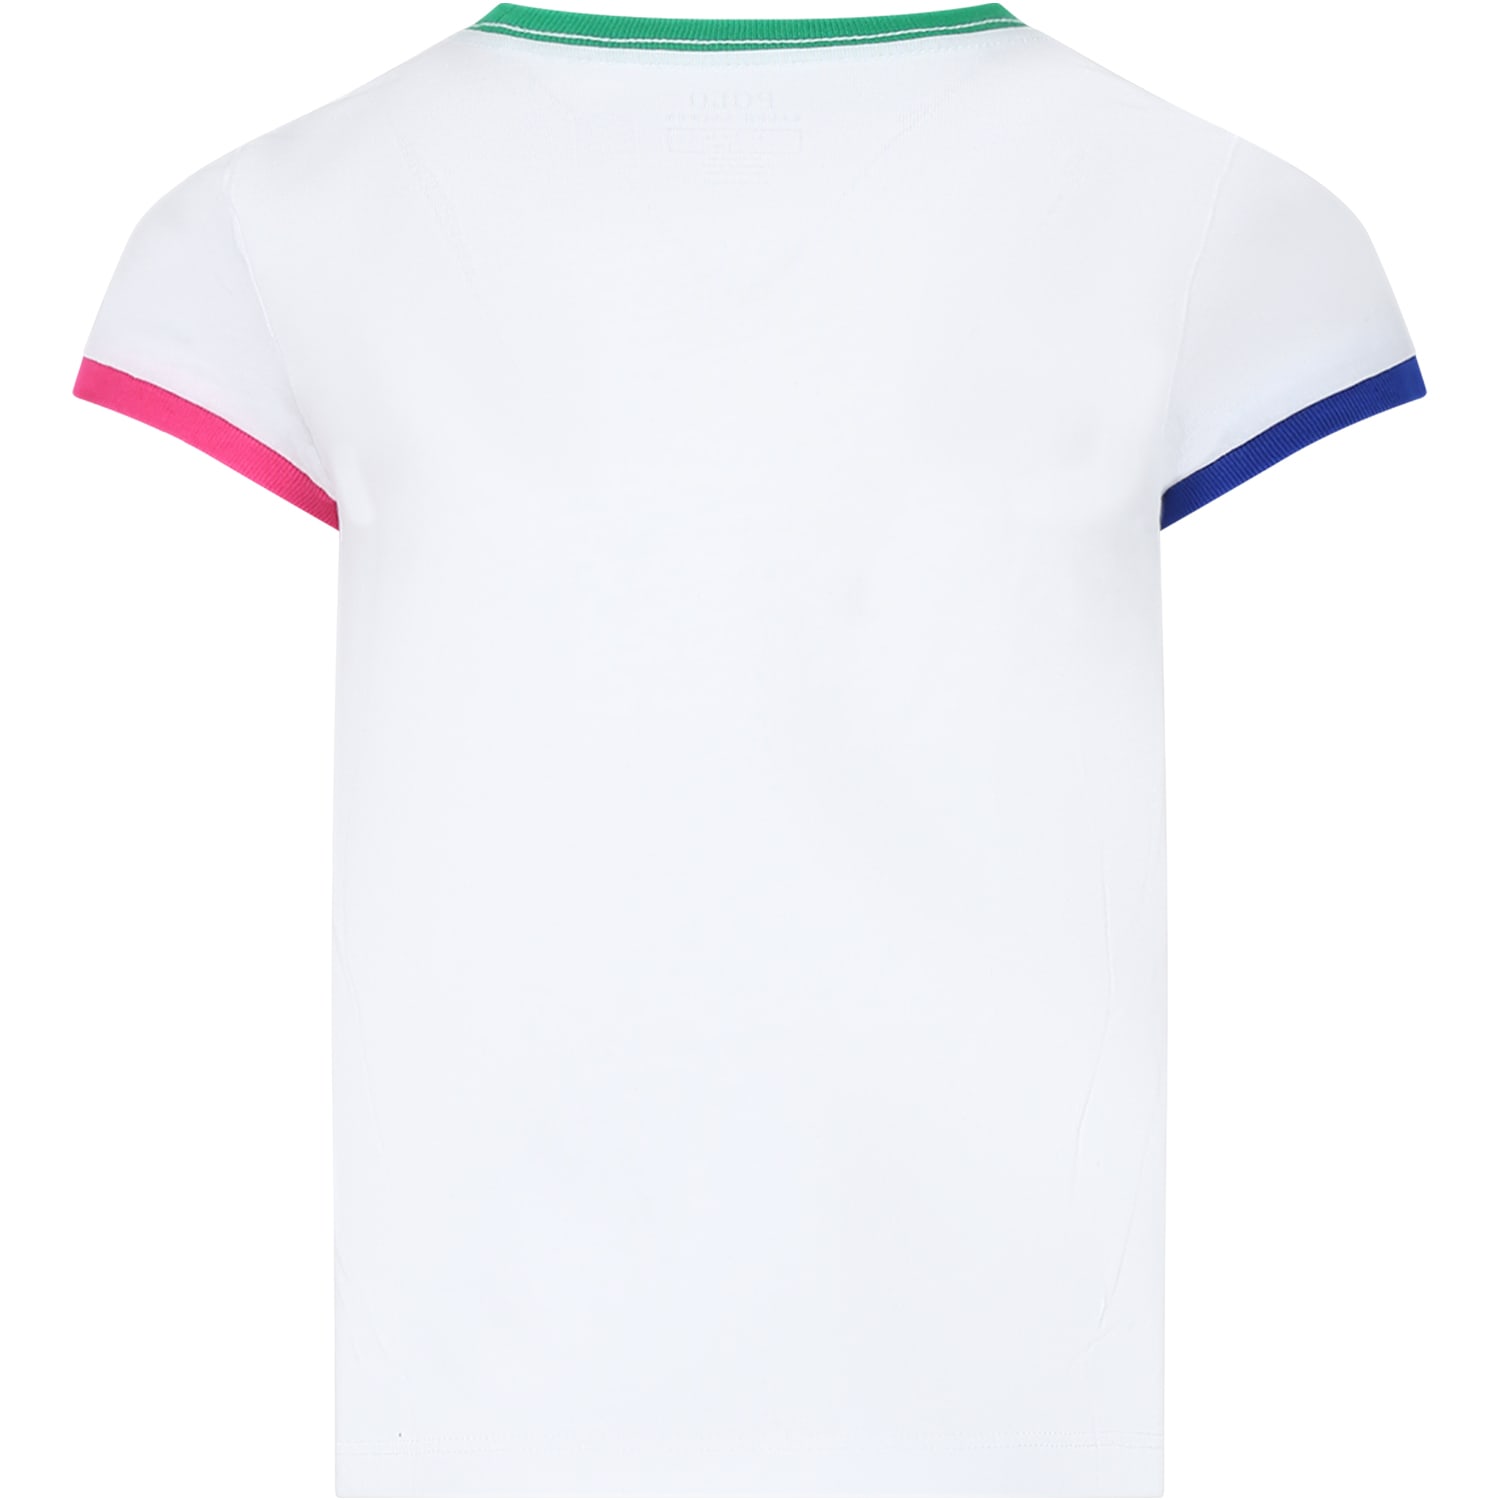 Shop Ralph Lauren White T-shirt For Girl With Polo Bear